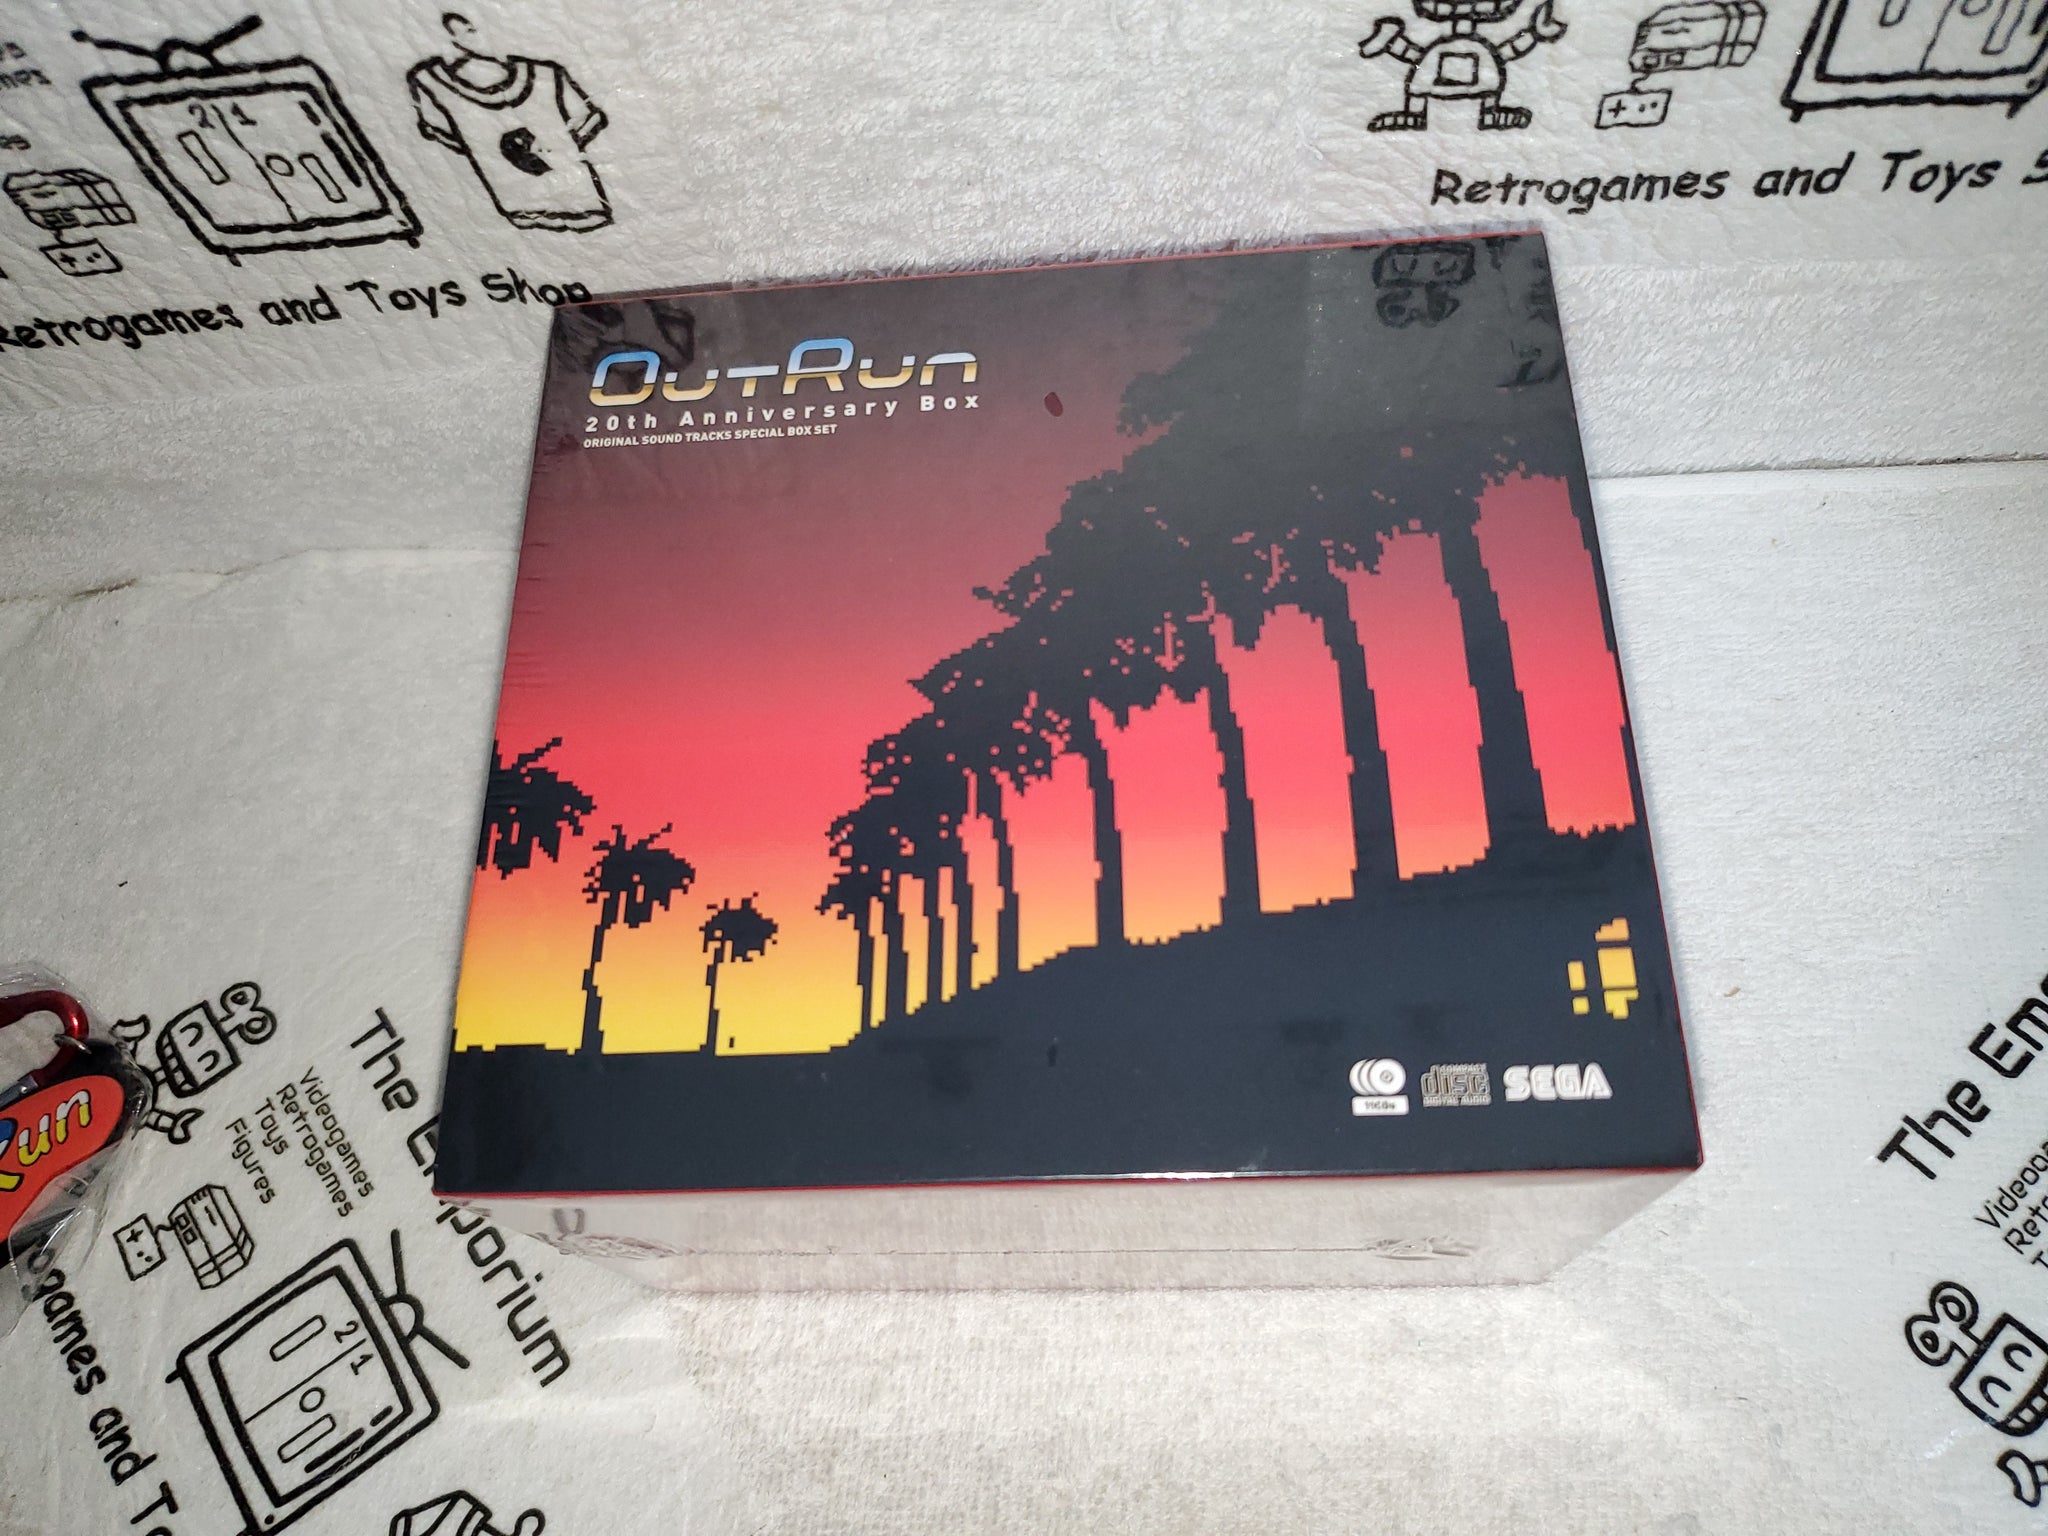 Out Run 20th Anniversary Box, set -11 cds - soundtrack original japanese cd